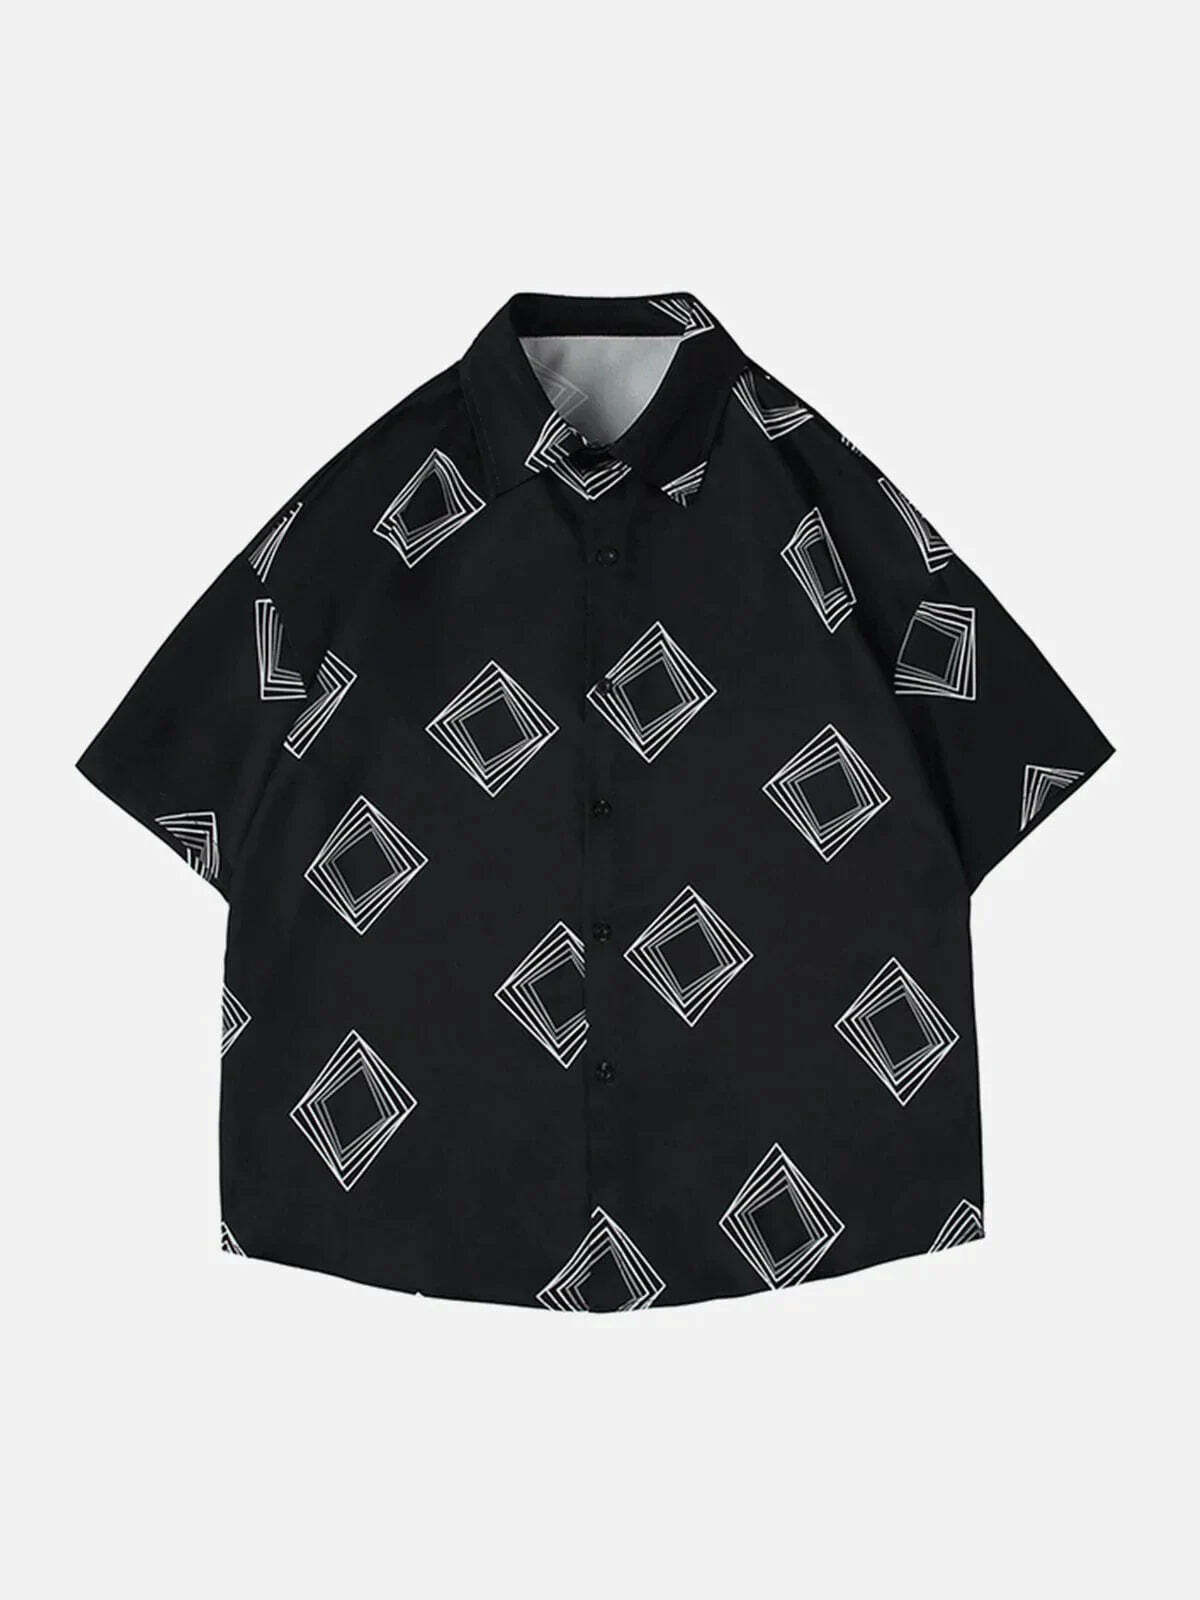 geometric print short sleeve shirt edgy streetwear essential 8344